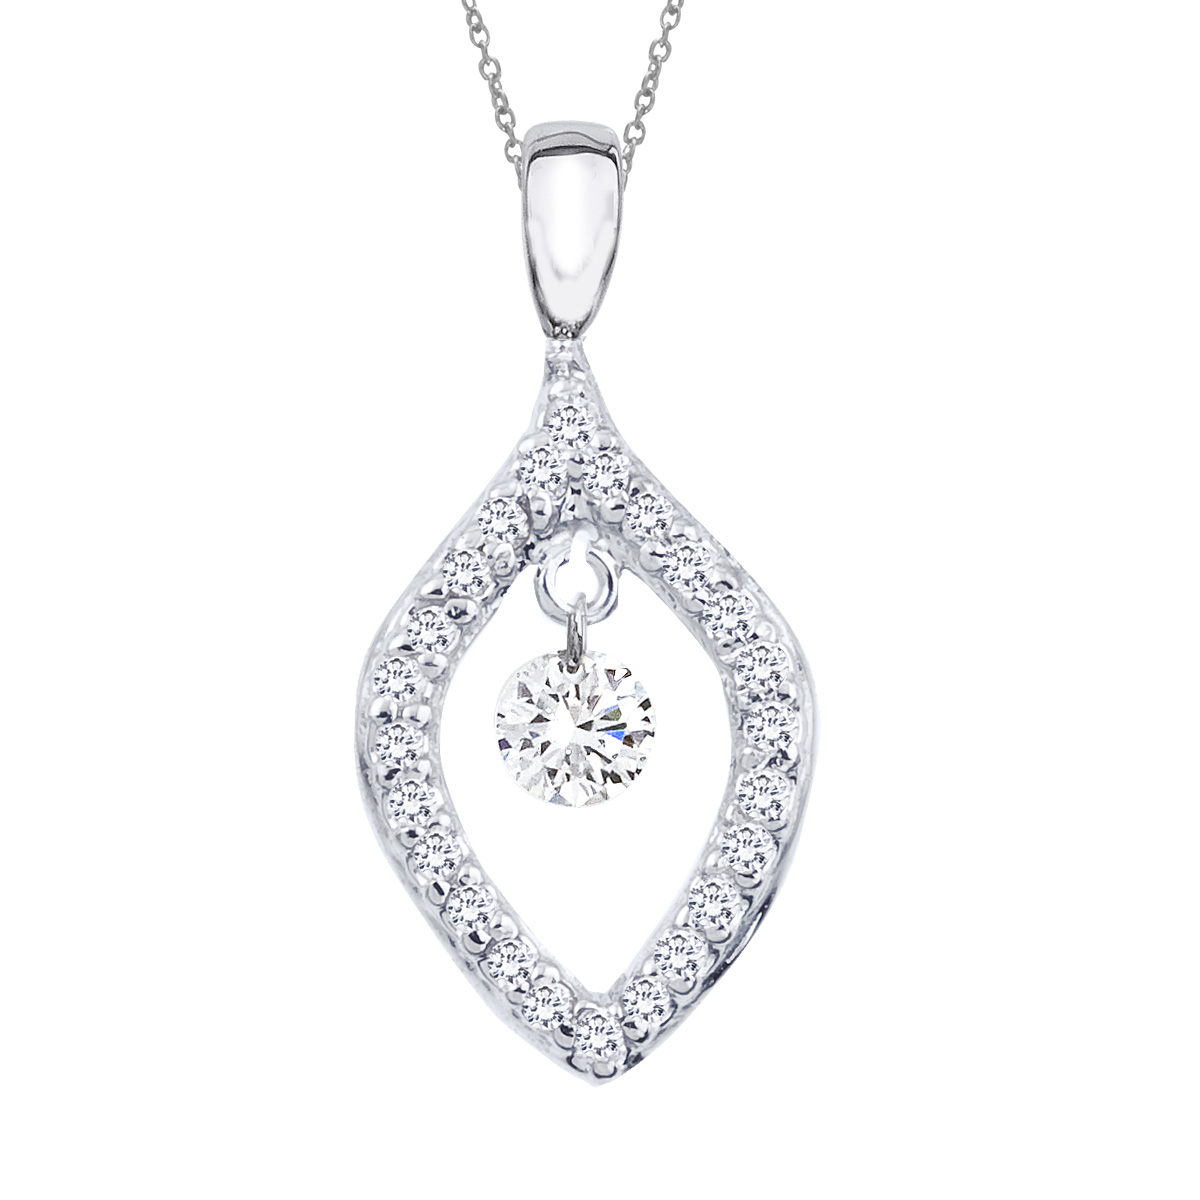 14k gold Dashinng Diamonds pendant with 0.17 total ct diamonds. The center dangling diamond dance...